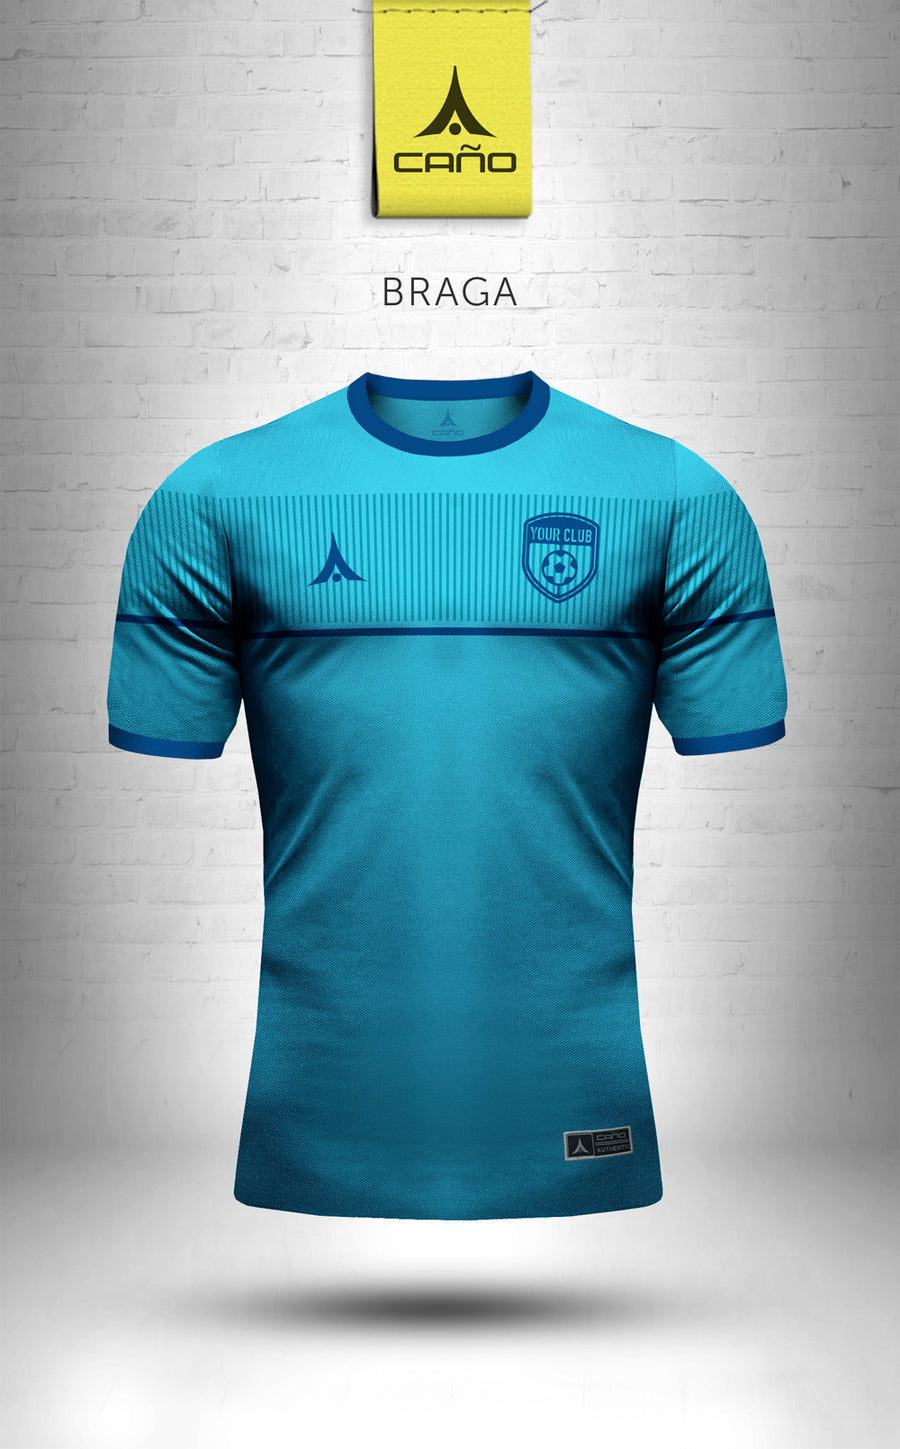 Braga in light blue/blue